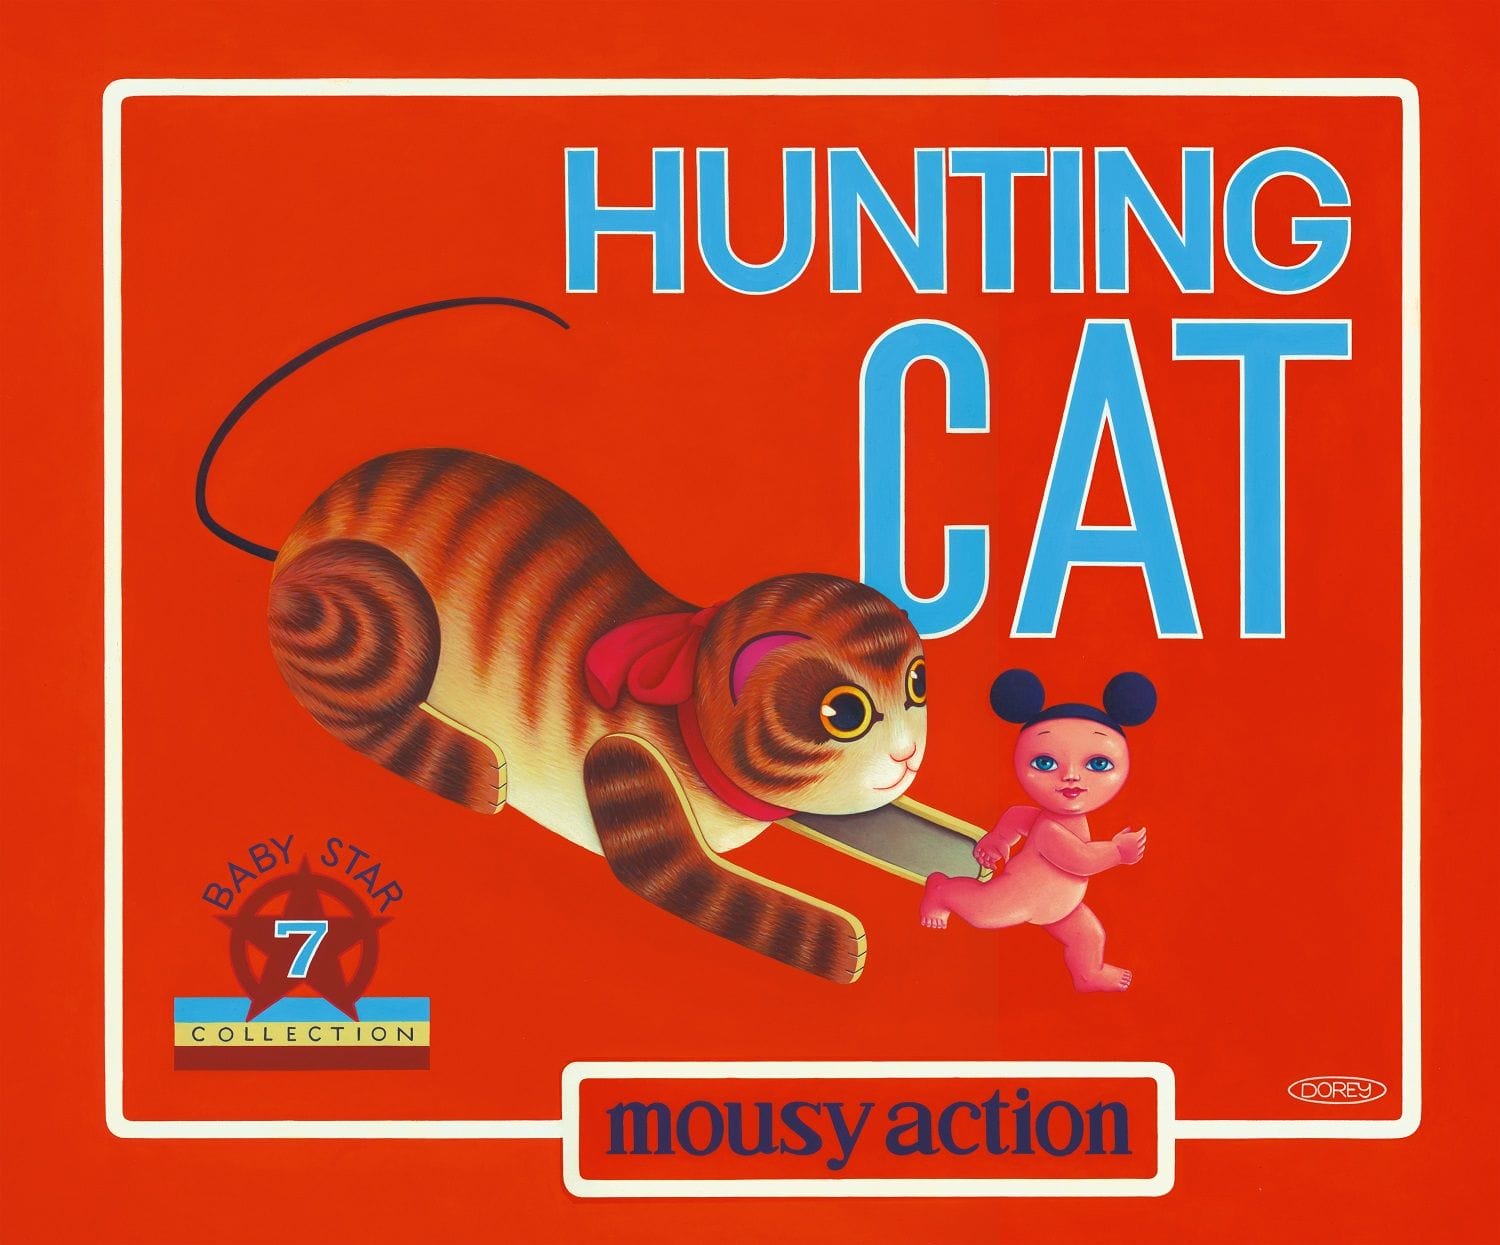 "Hunting Cat"